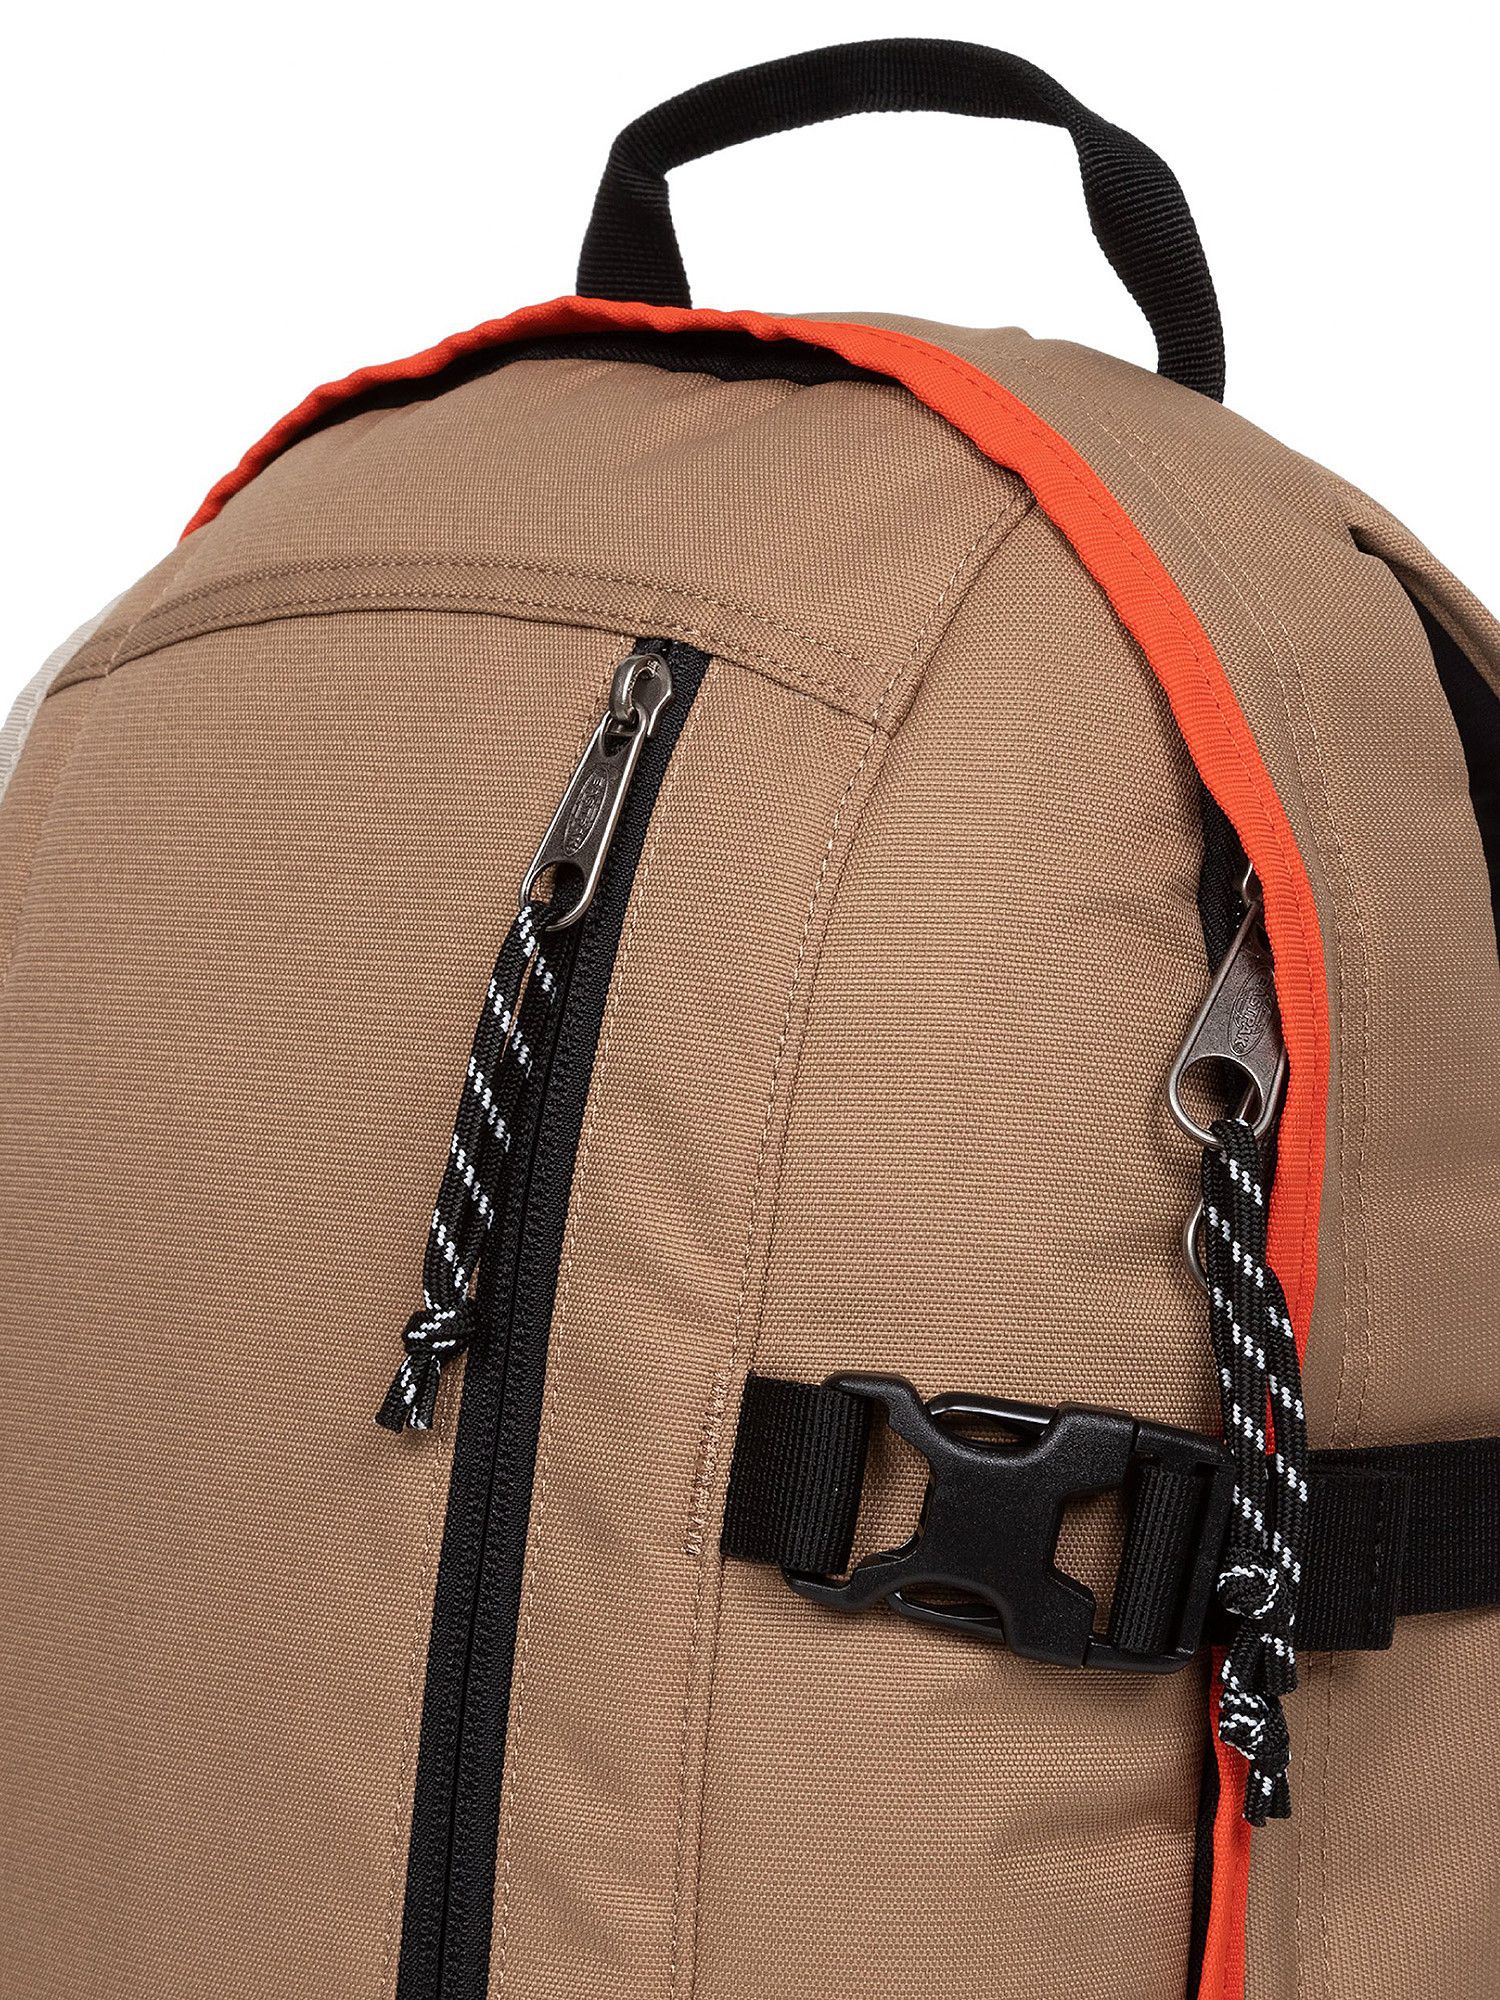 Eastpak - Floid Cs Explore brown backpack, Brown, large image number 4